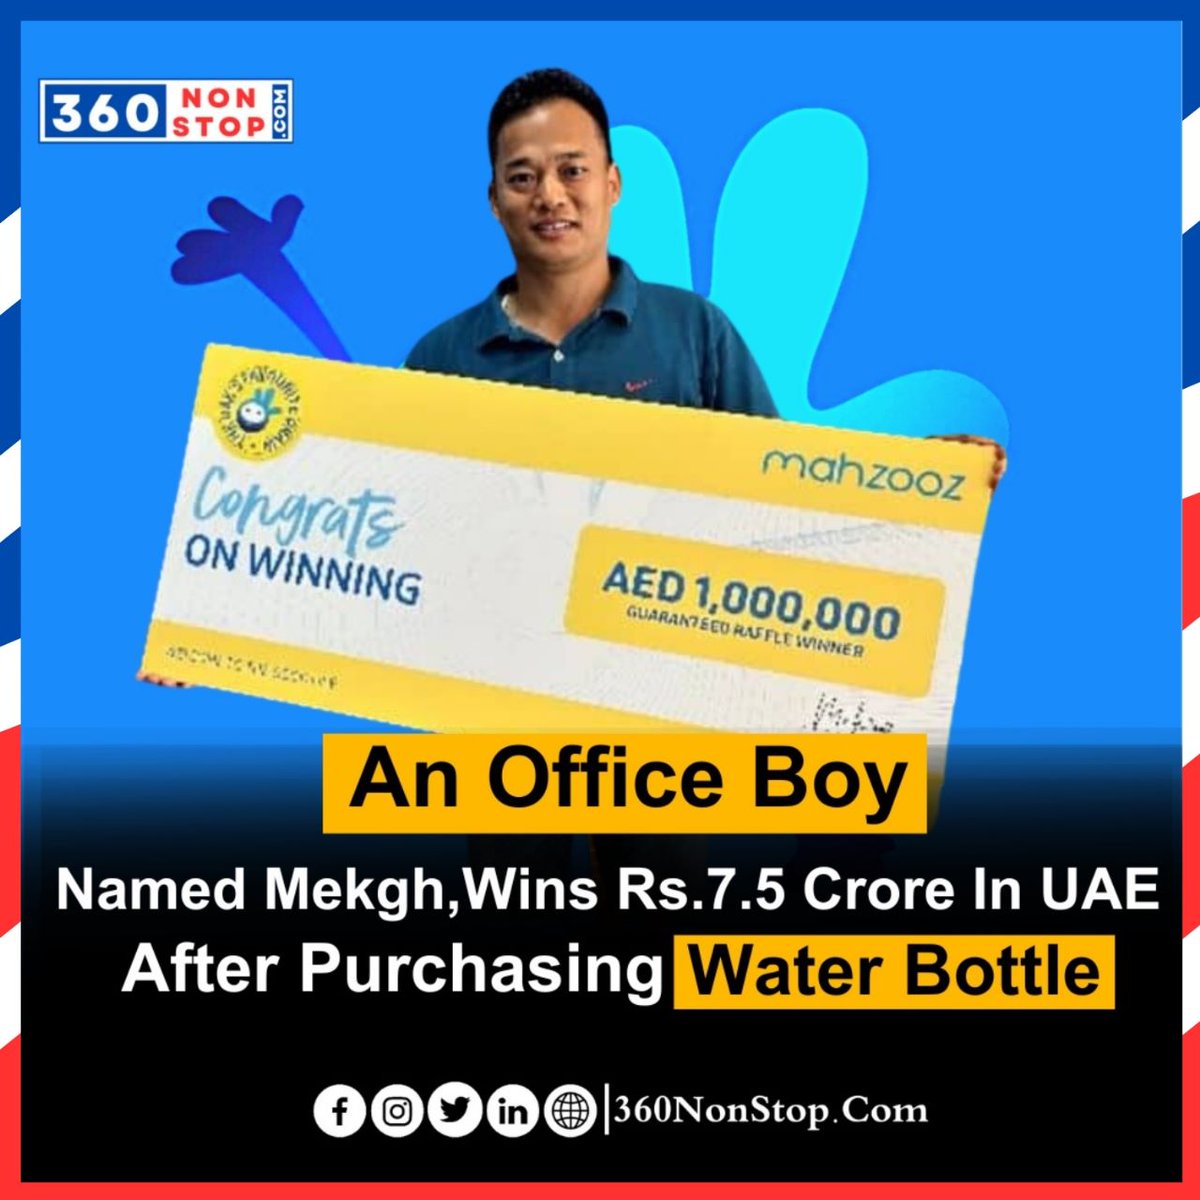 An Office Boy Named Mekgh, Wins Rs. 7.5 Crore In UAE After Purchasing Water Bottle From mahzooz.
#Mahzooz #LotteryWinner #OfficeBoy #LifeChangingPrize #UAE #Jackpot #FinancialSuccess  #LifeOfAbundance #360nonstop